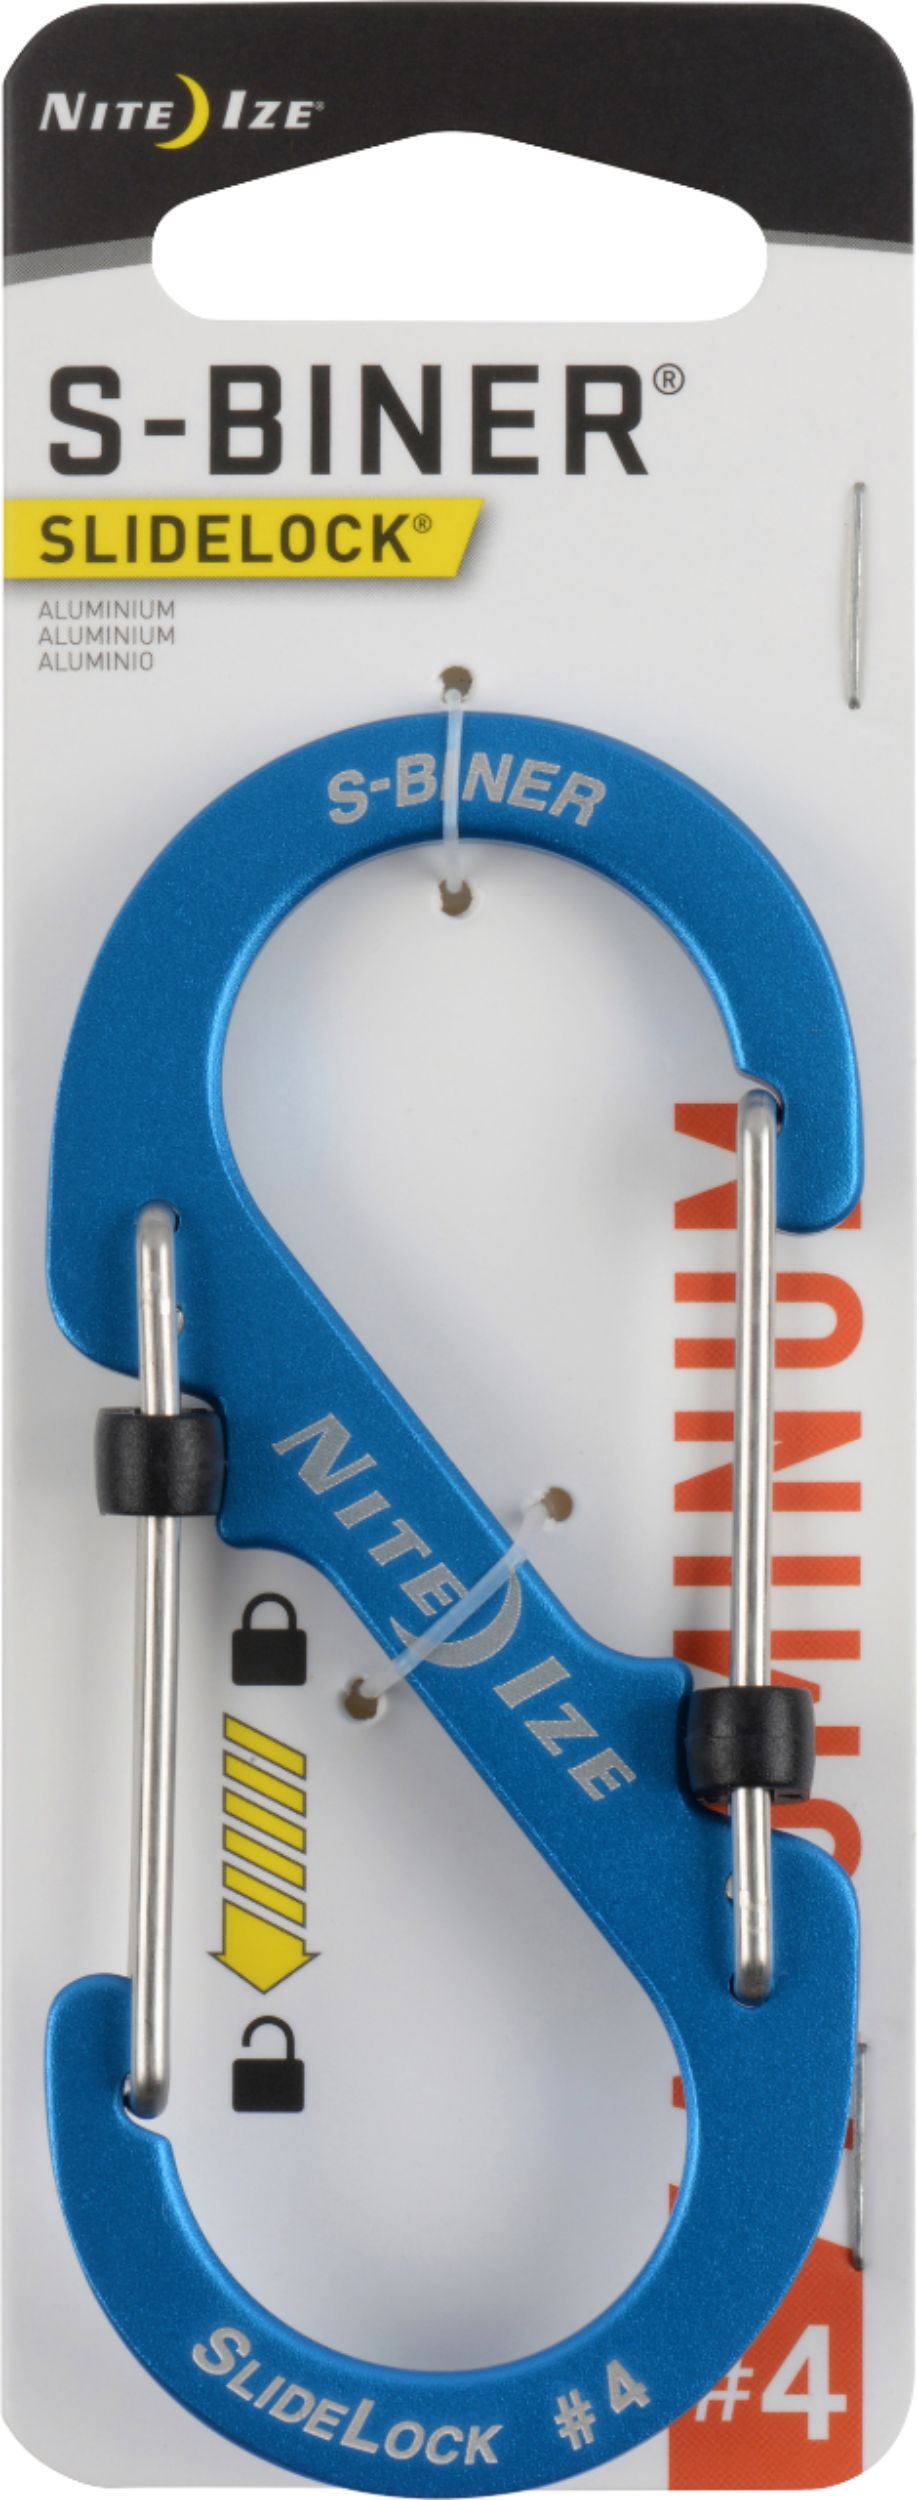 Nite Ize Blue Aluminum Snap-Hook Key Ring, Lightweight & Strong, SlideLock Carabiner Aluminum #2, Solid Construction